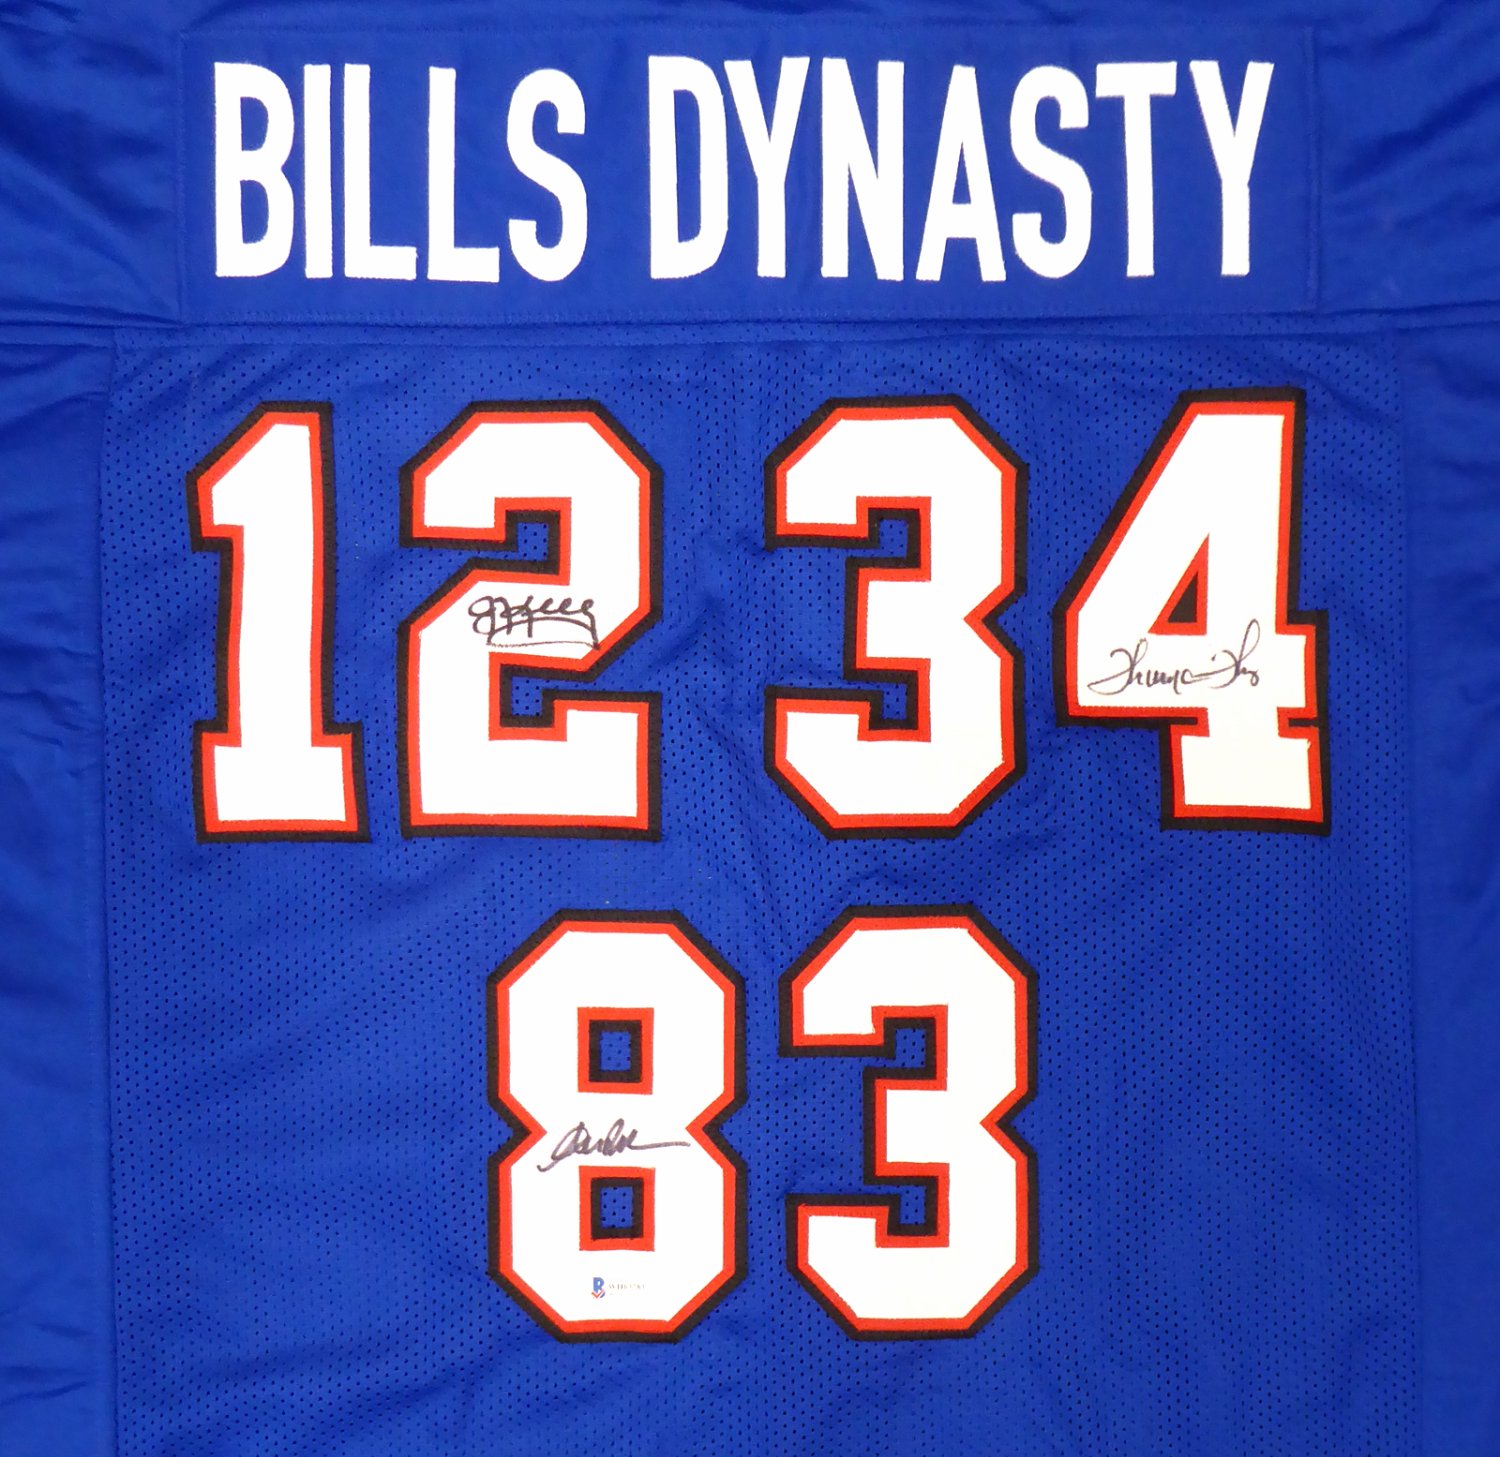 Buy authentic Buffalo Bills team merchandise